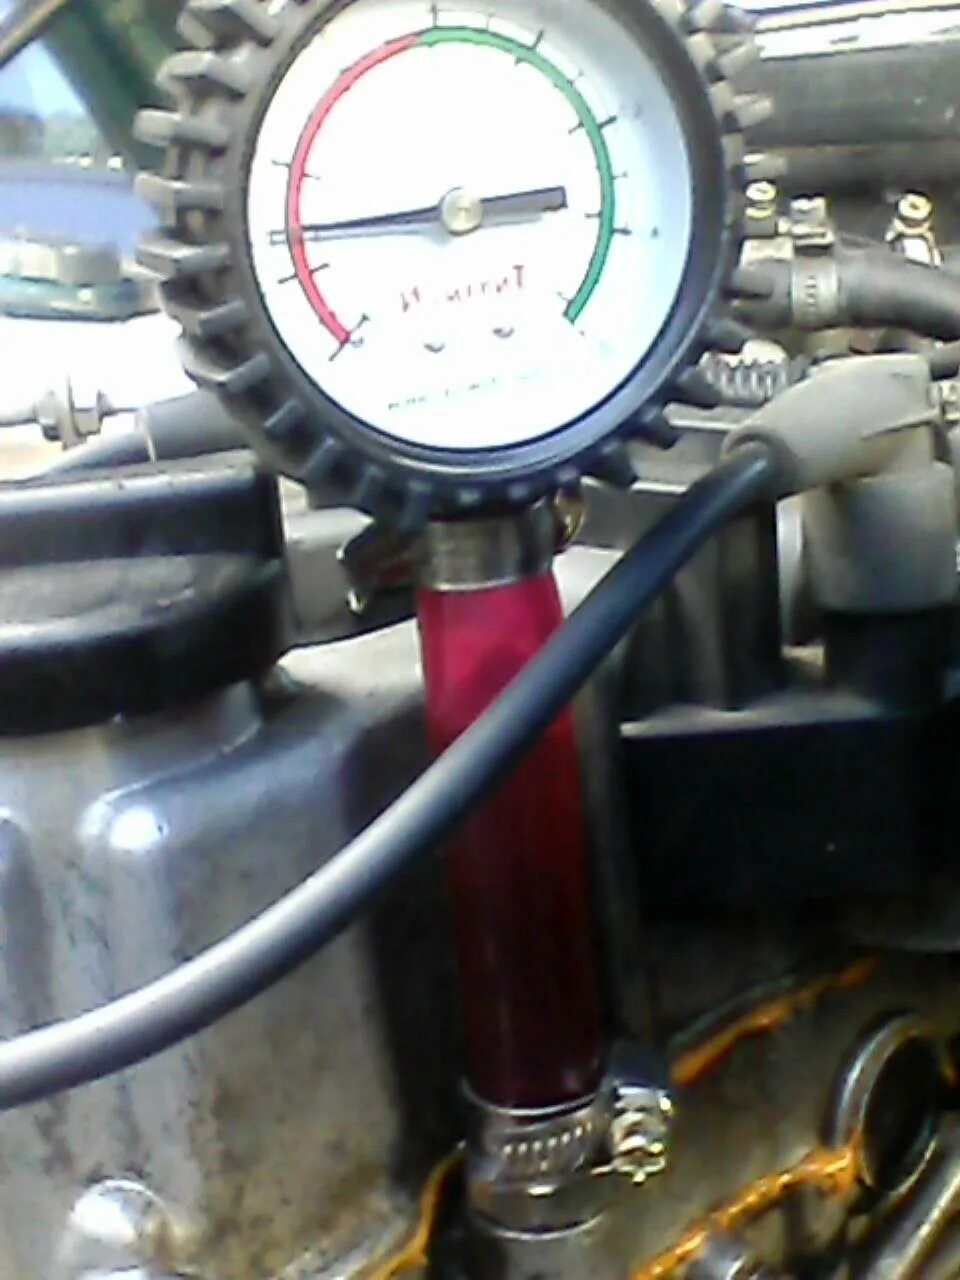 Масляный манометр ВАЗ 2112. Замер давления масла 2112 16кл. Манометр для измерения давления масла в двигателе ВАЗ 2112. ВАЗ 2112 манометр давления масла.